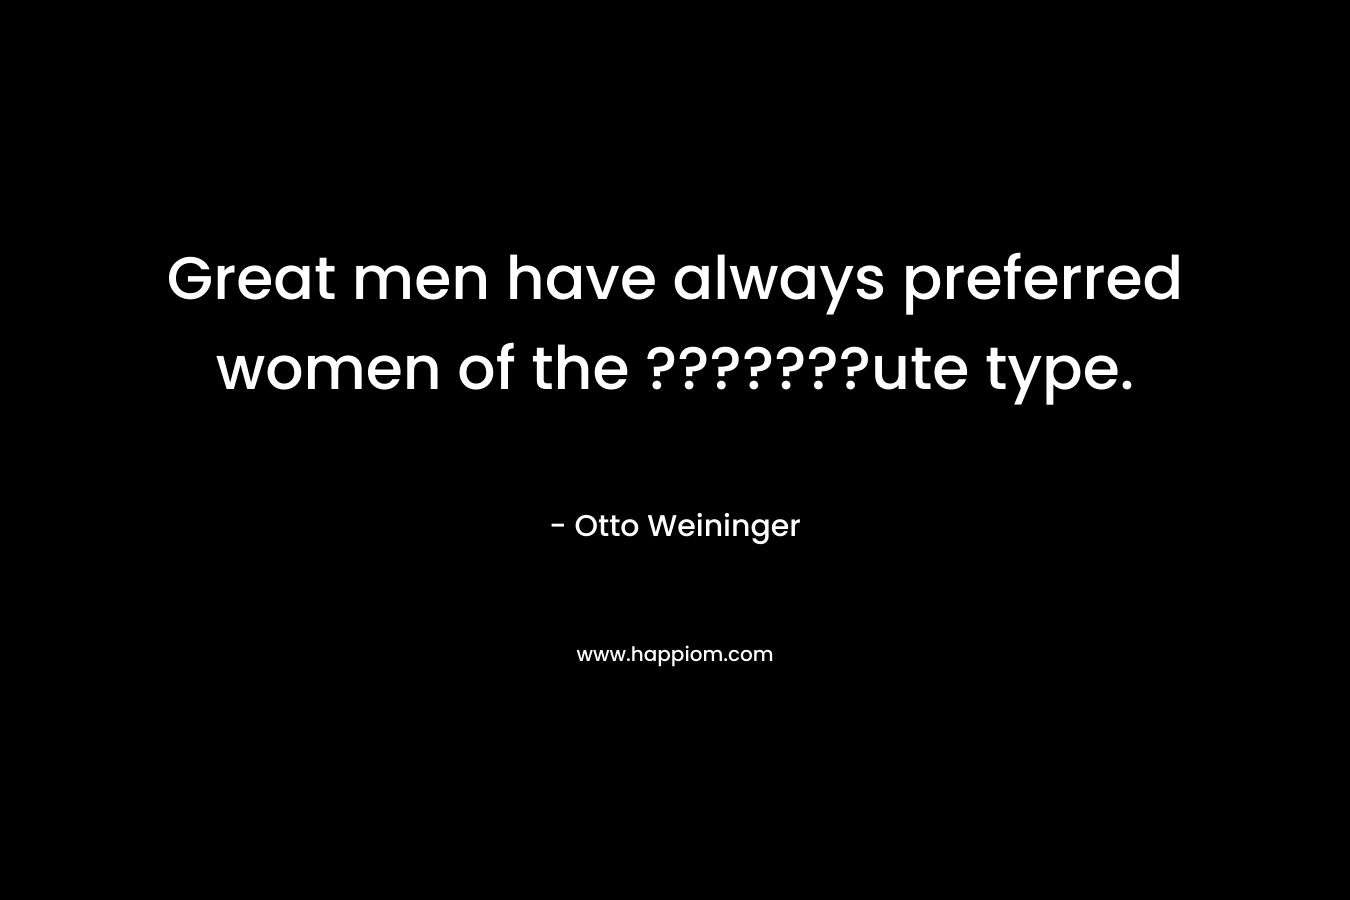 Great men have always preferred women of the ???????ute type. – Otto Weininger